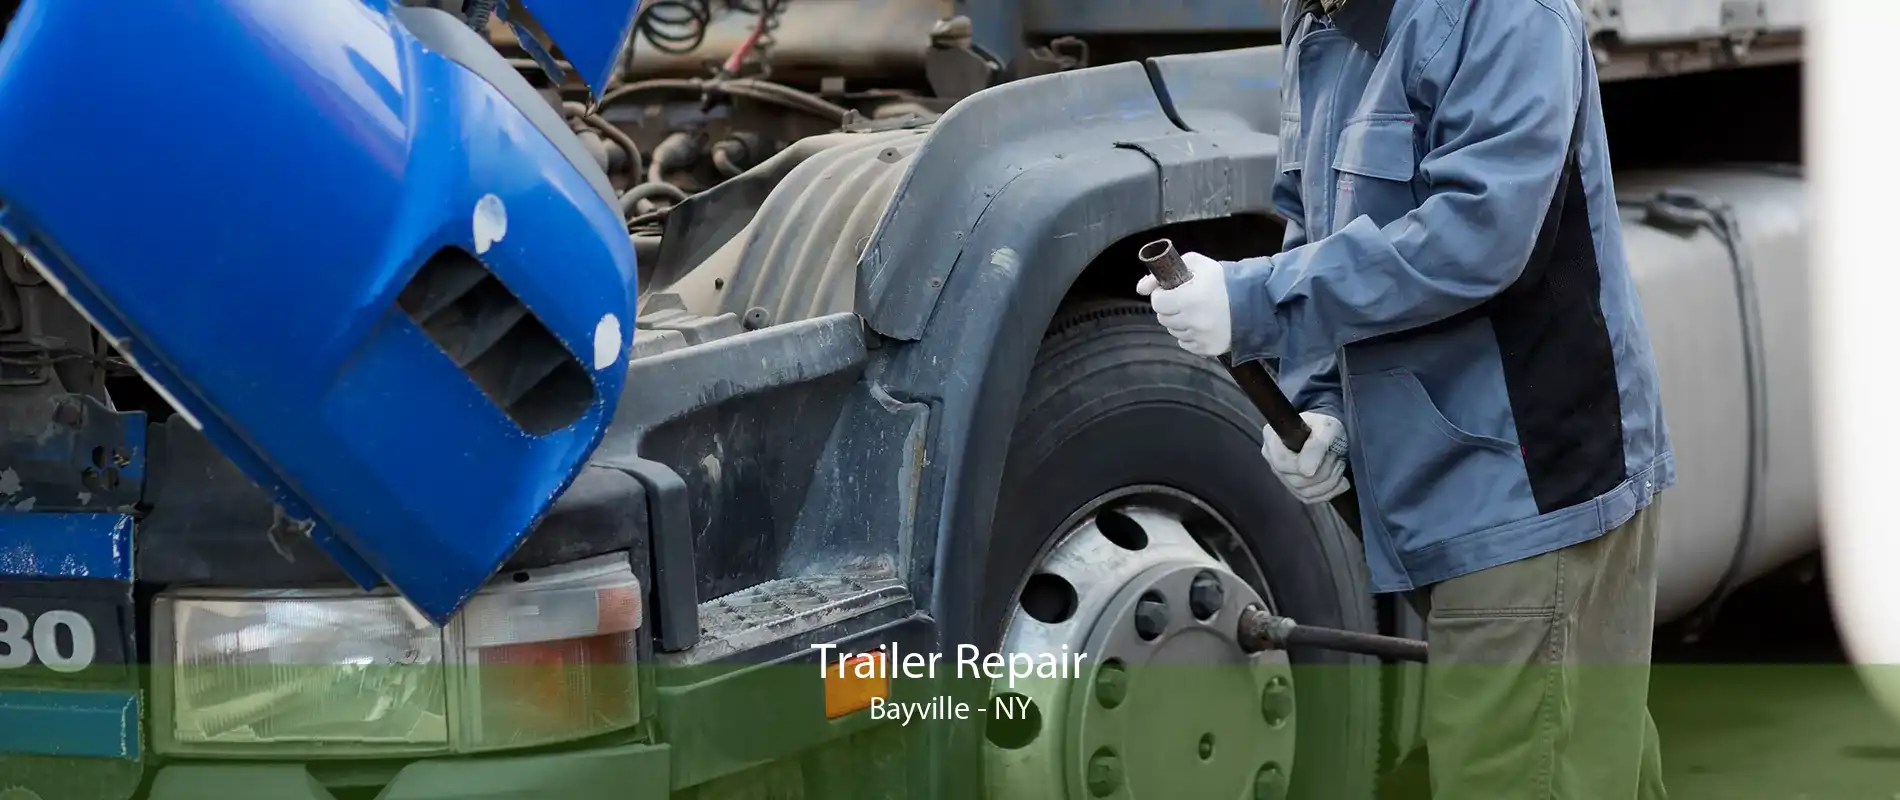 Trailer Repair Bayville - NY